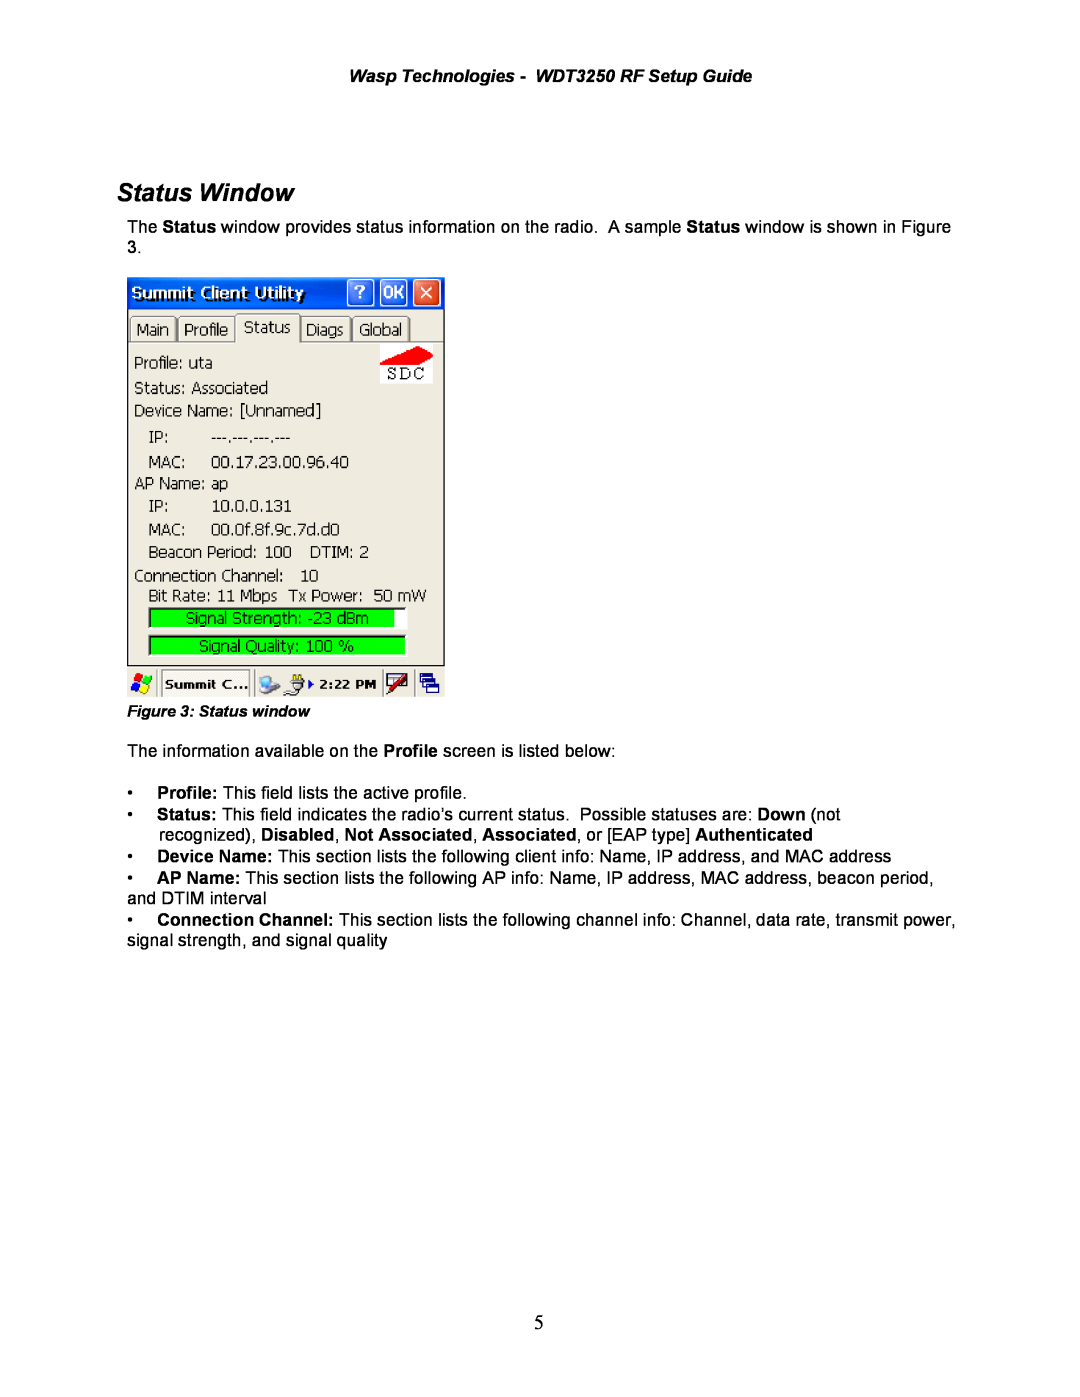 Wasp Bar Code setup guide Status Window, Wasp Technologies - WDT3250 RF Setup Guide 